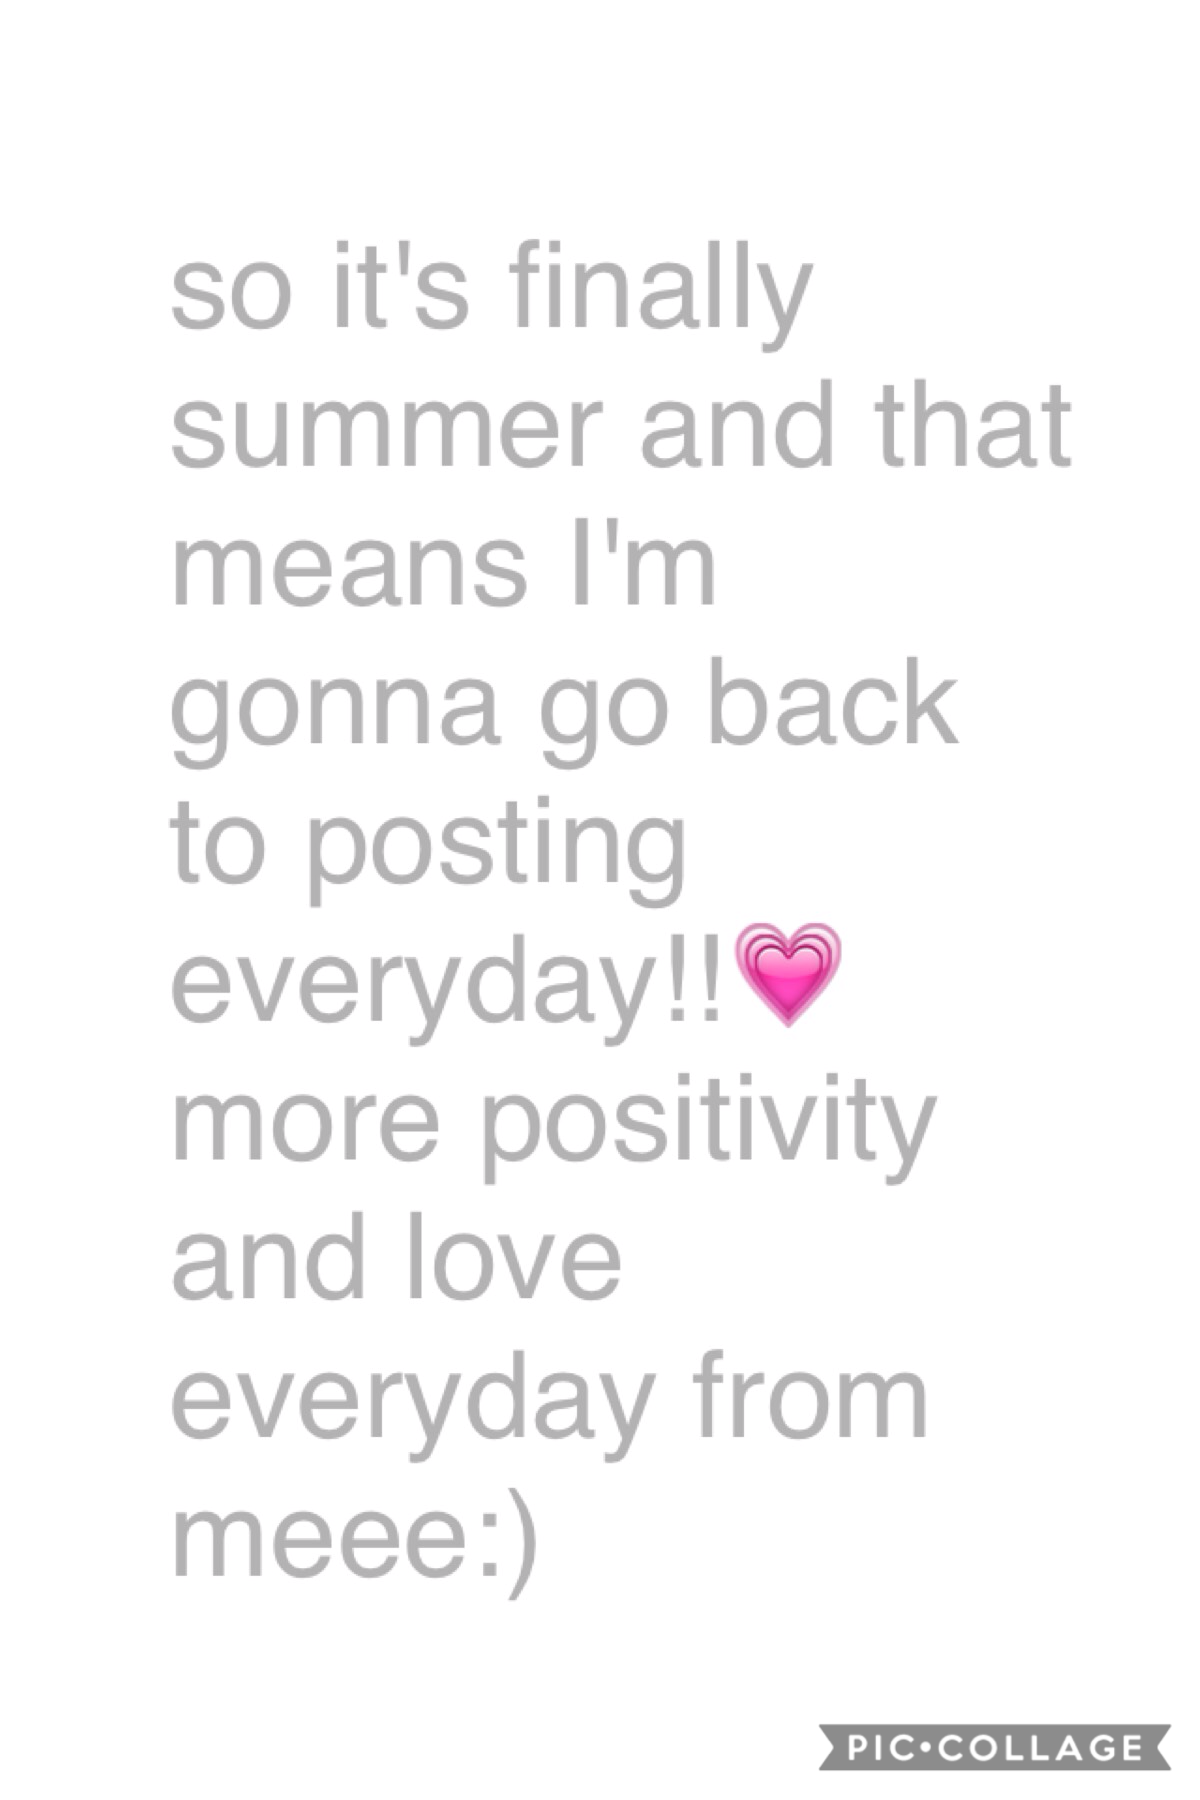 🍻 C L I C K 🍻

It's summer break! I can post whenever I want! finallyyyyyy😍 love you guys😊💘💋😘